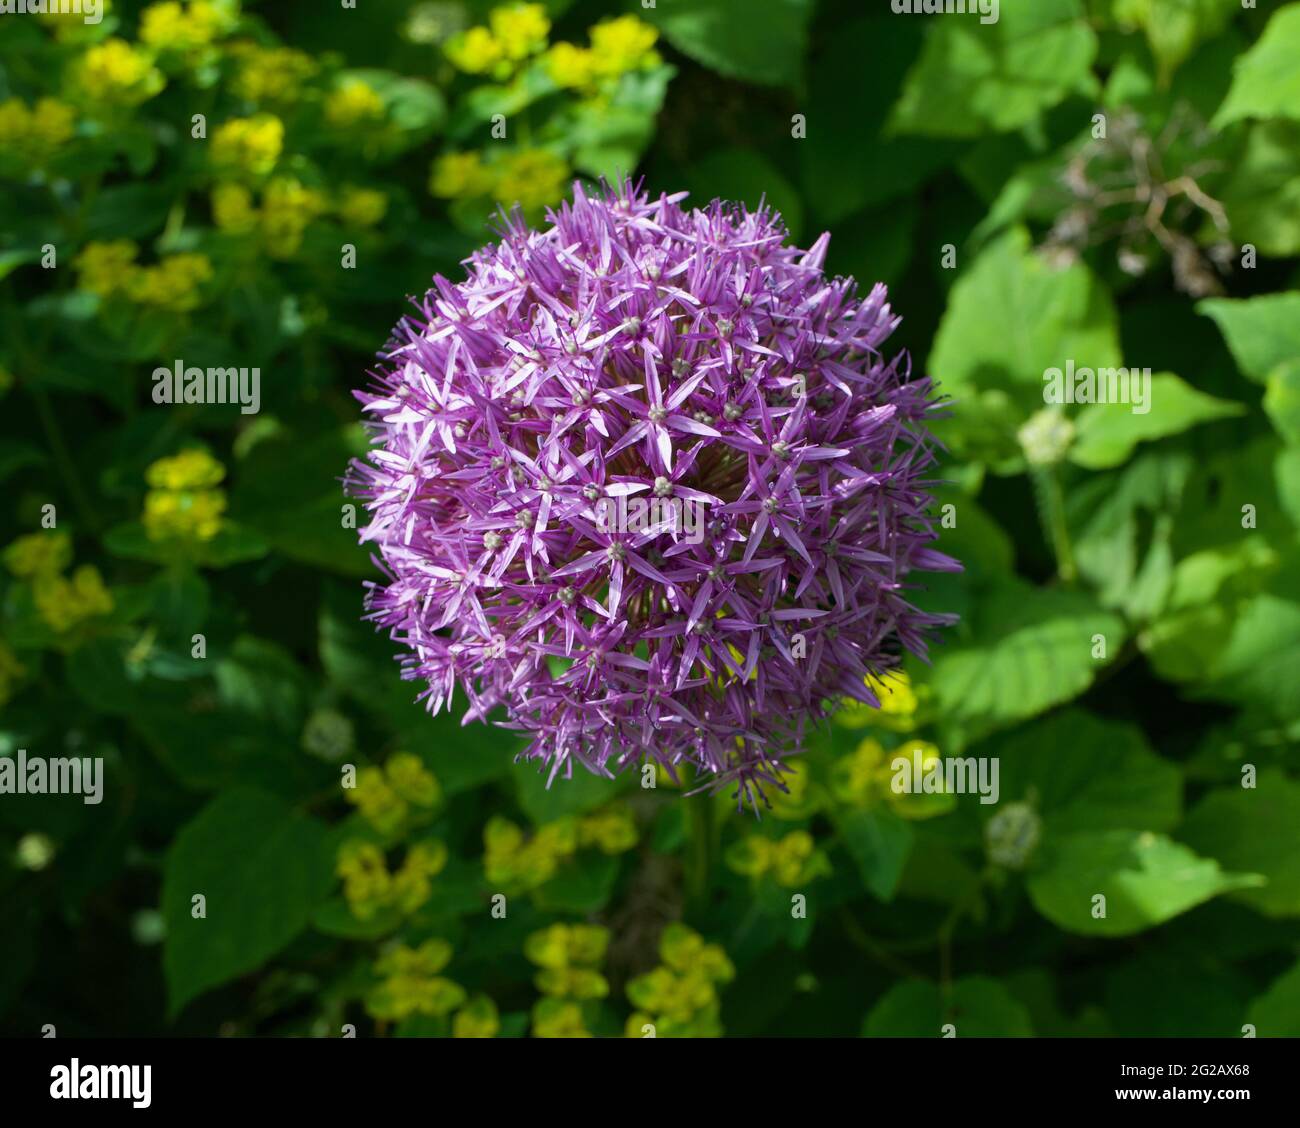 Beautiful pale purple allium flower on sunny day against foliage background Stock Photo